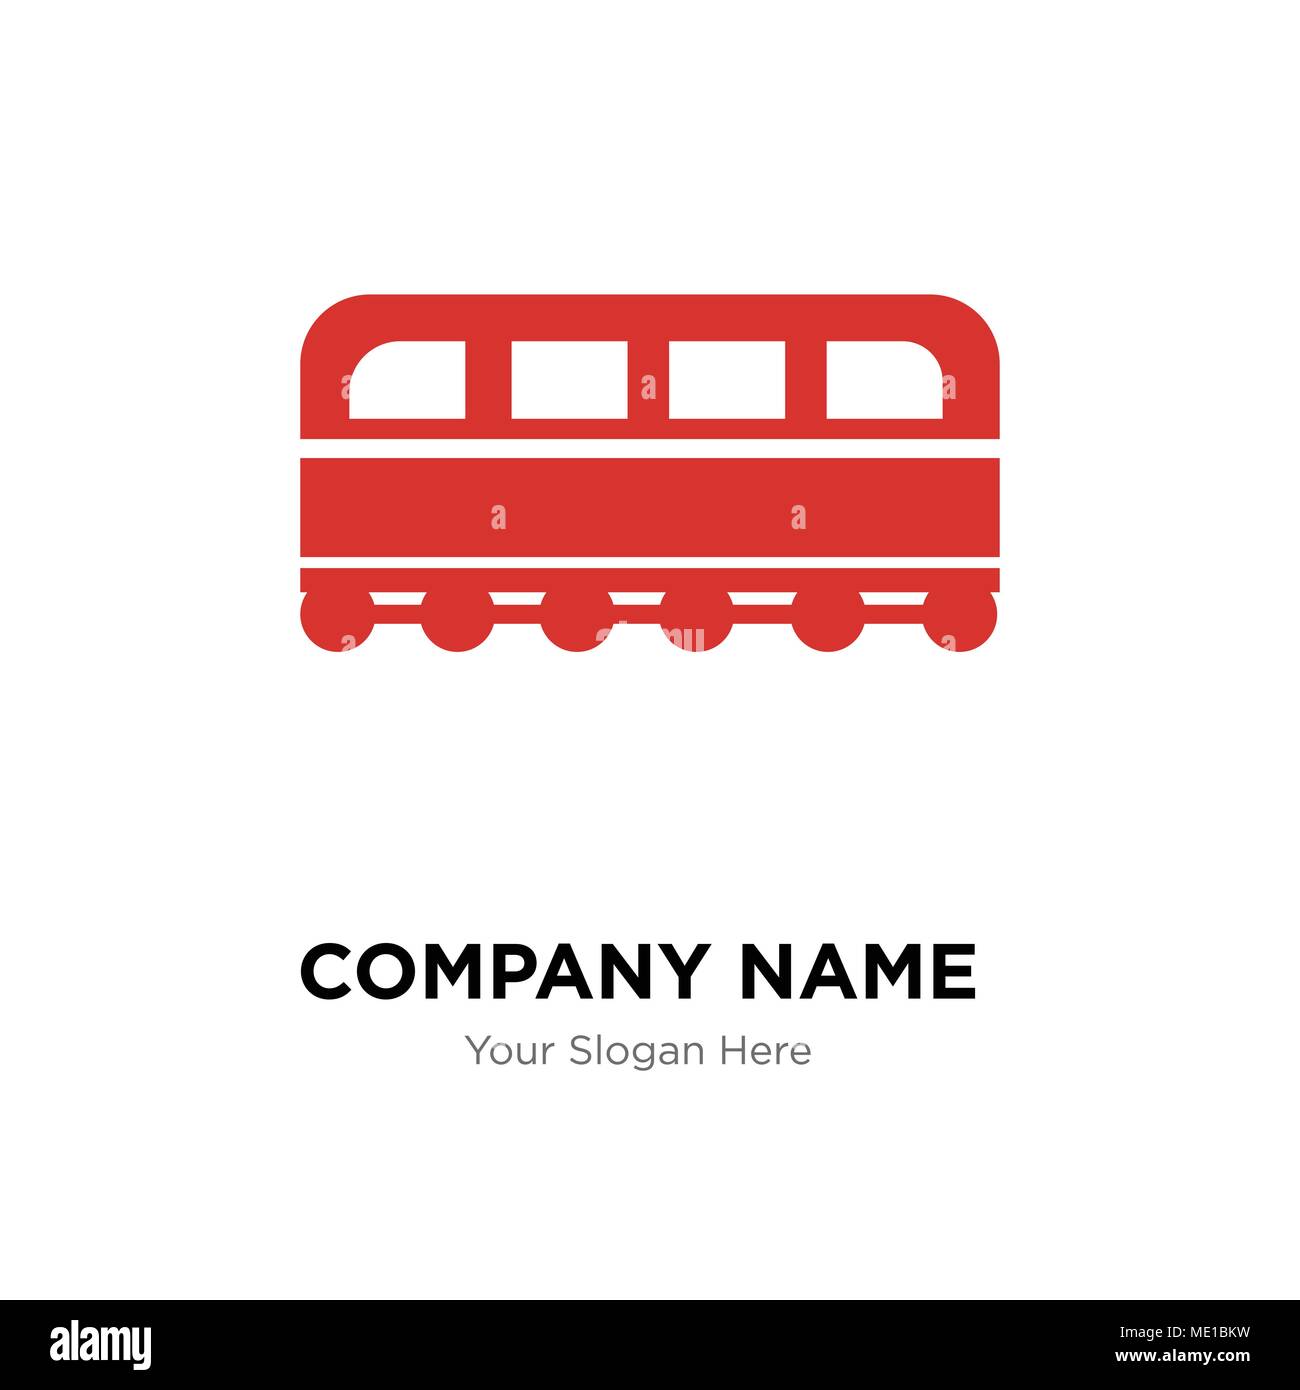 Train front company logo design template, Business corporate vector icon Stock Vector